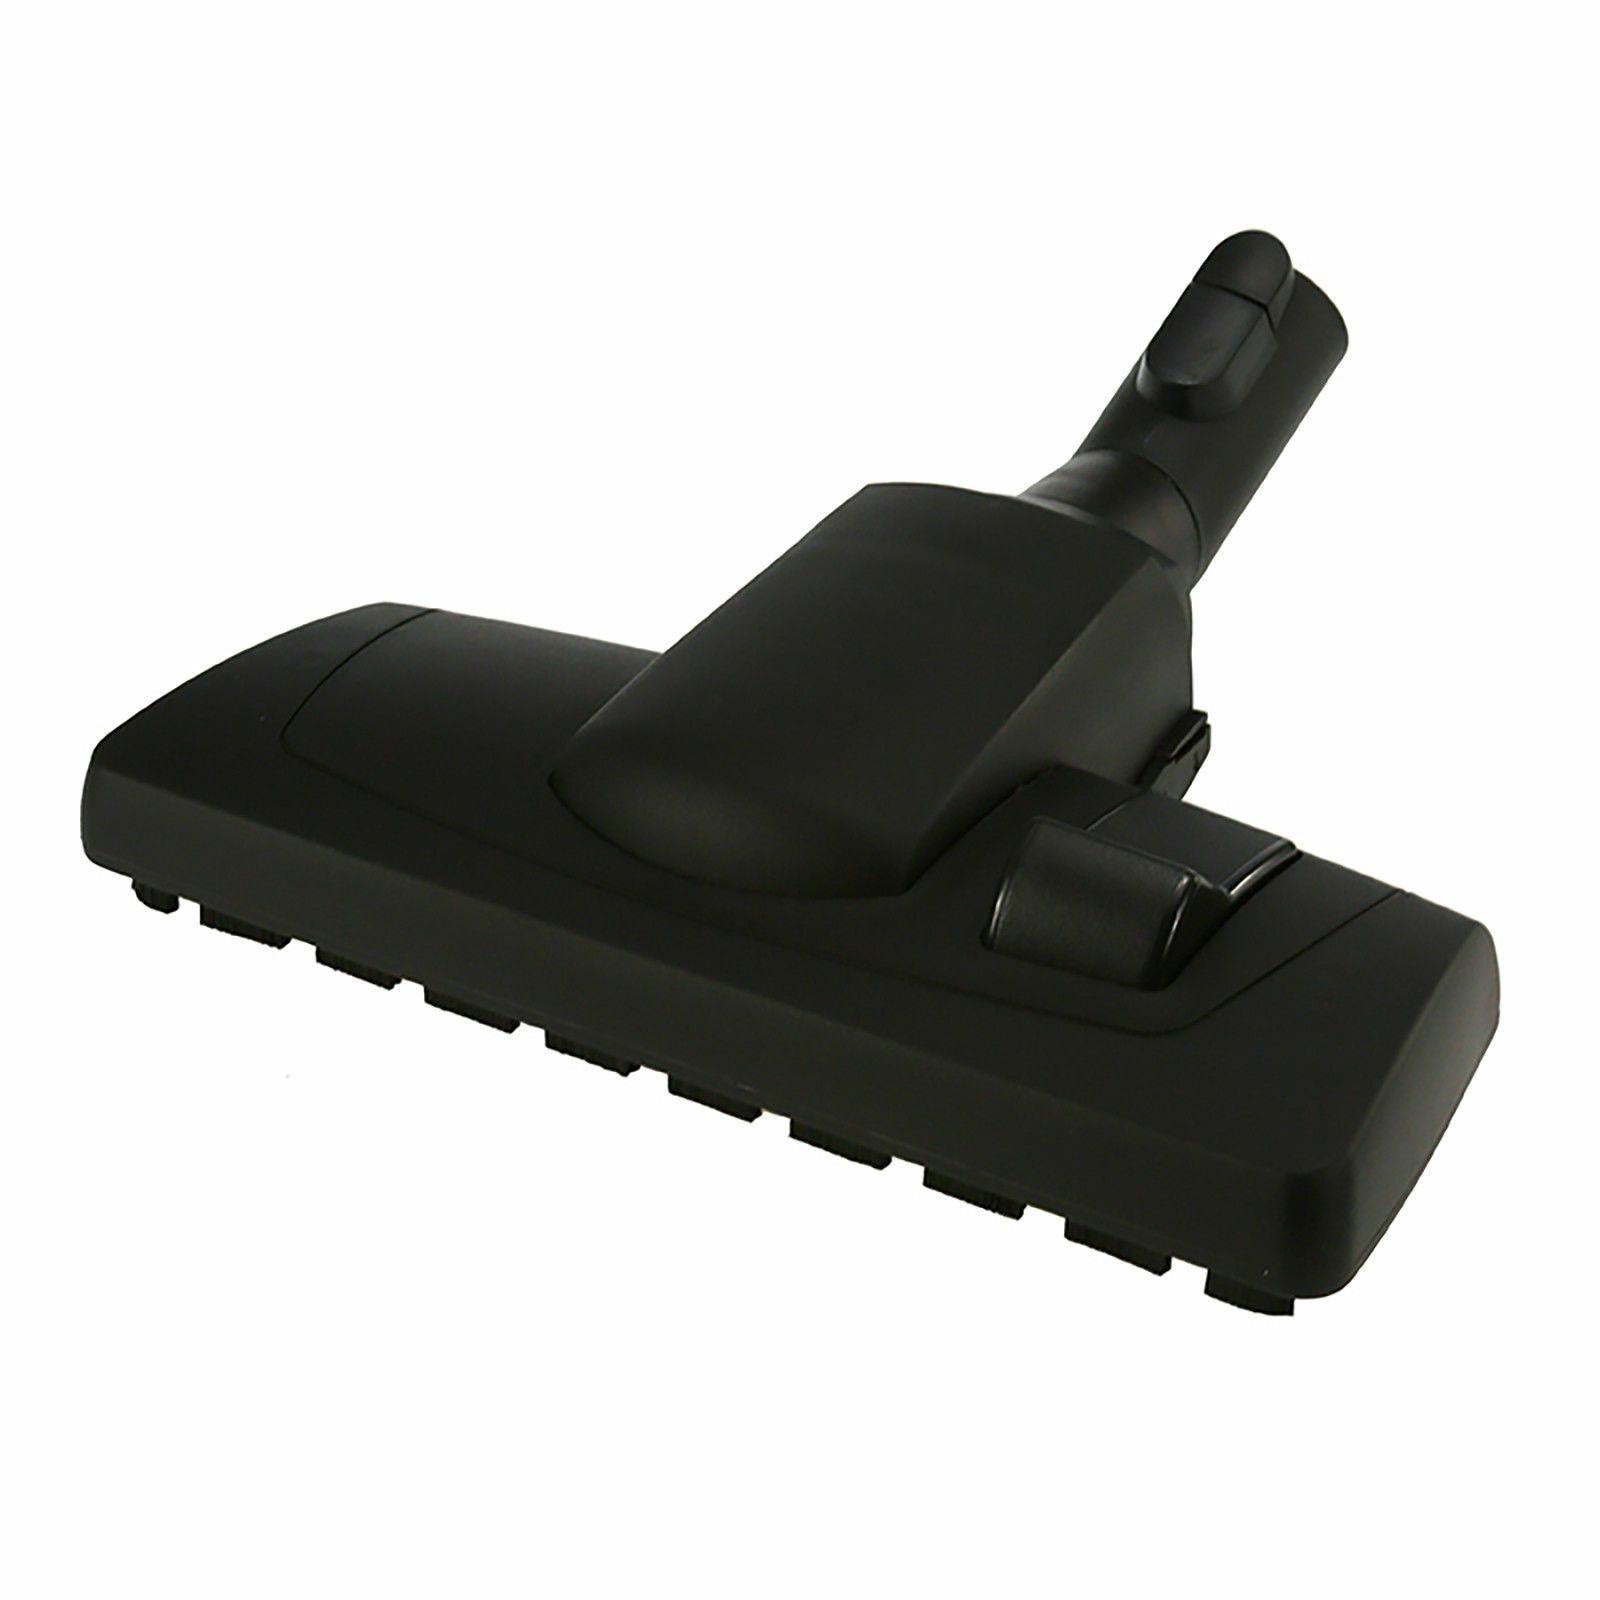 Hard Floor Brush Nozzle Head For Miele S6780 S8310 S8320 S8330 S8340 S8360 Sparesbarn